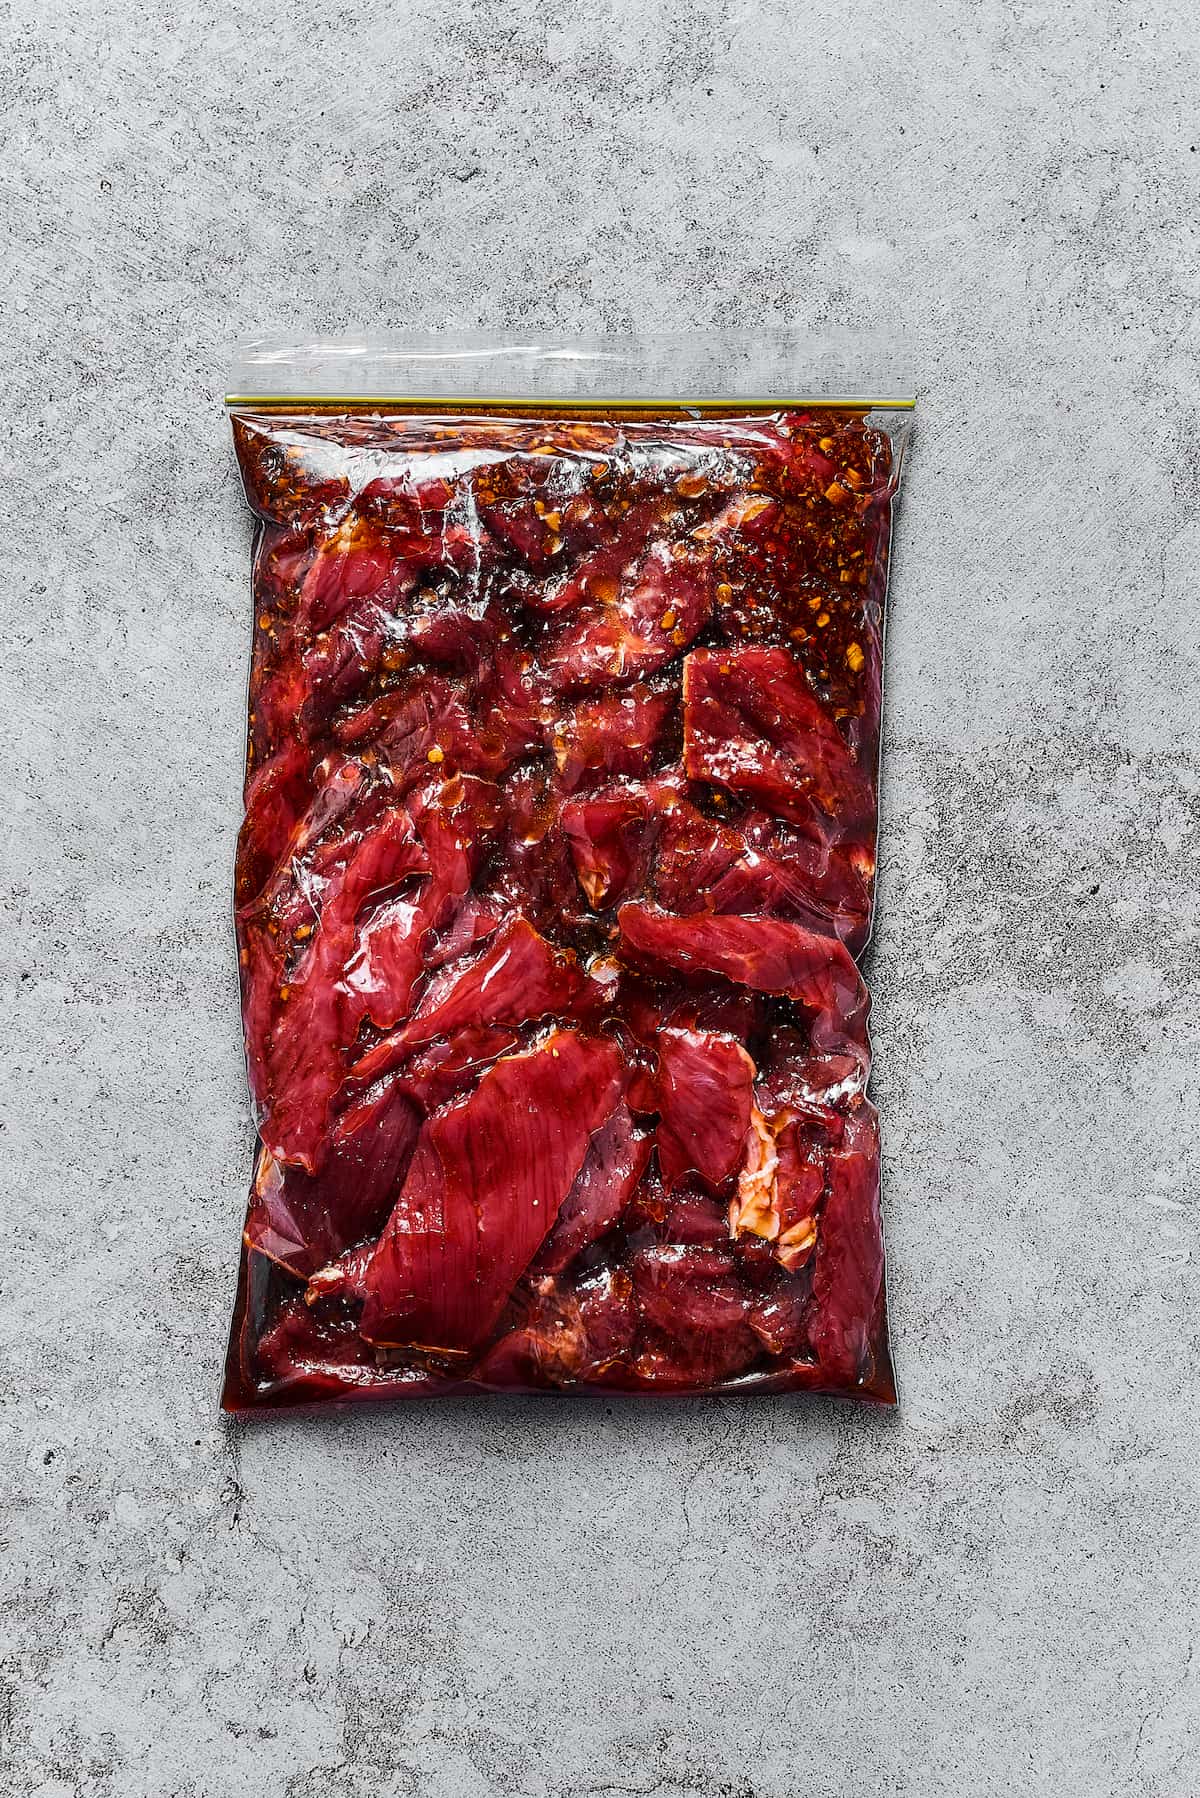 Steak and marinade in a zip-top bag.